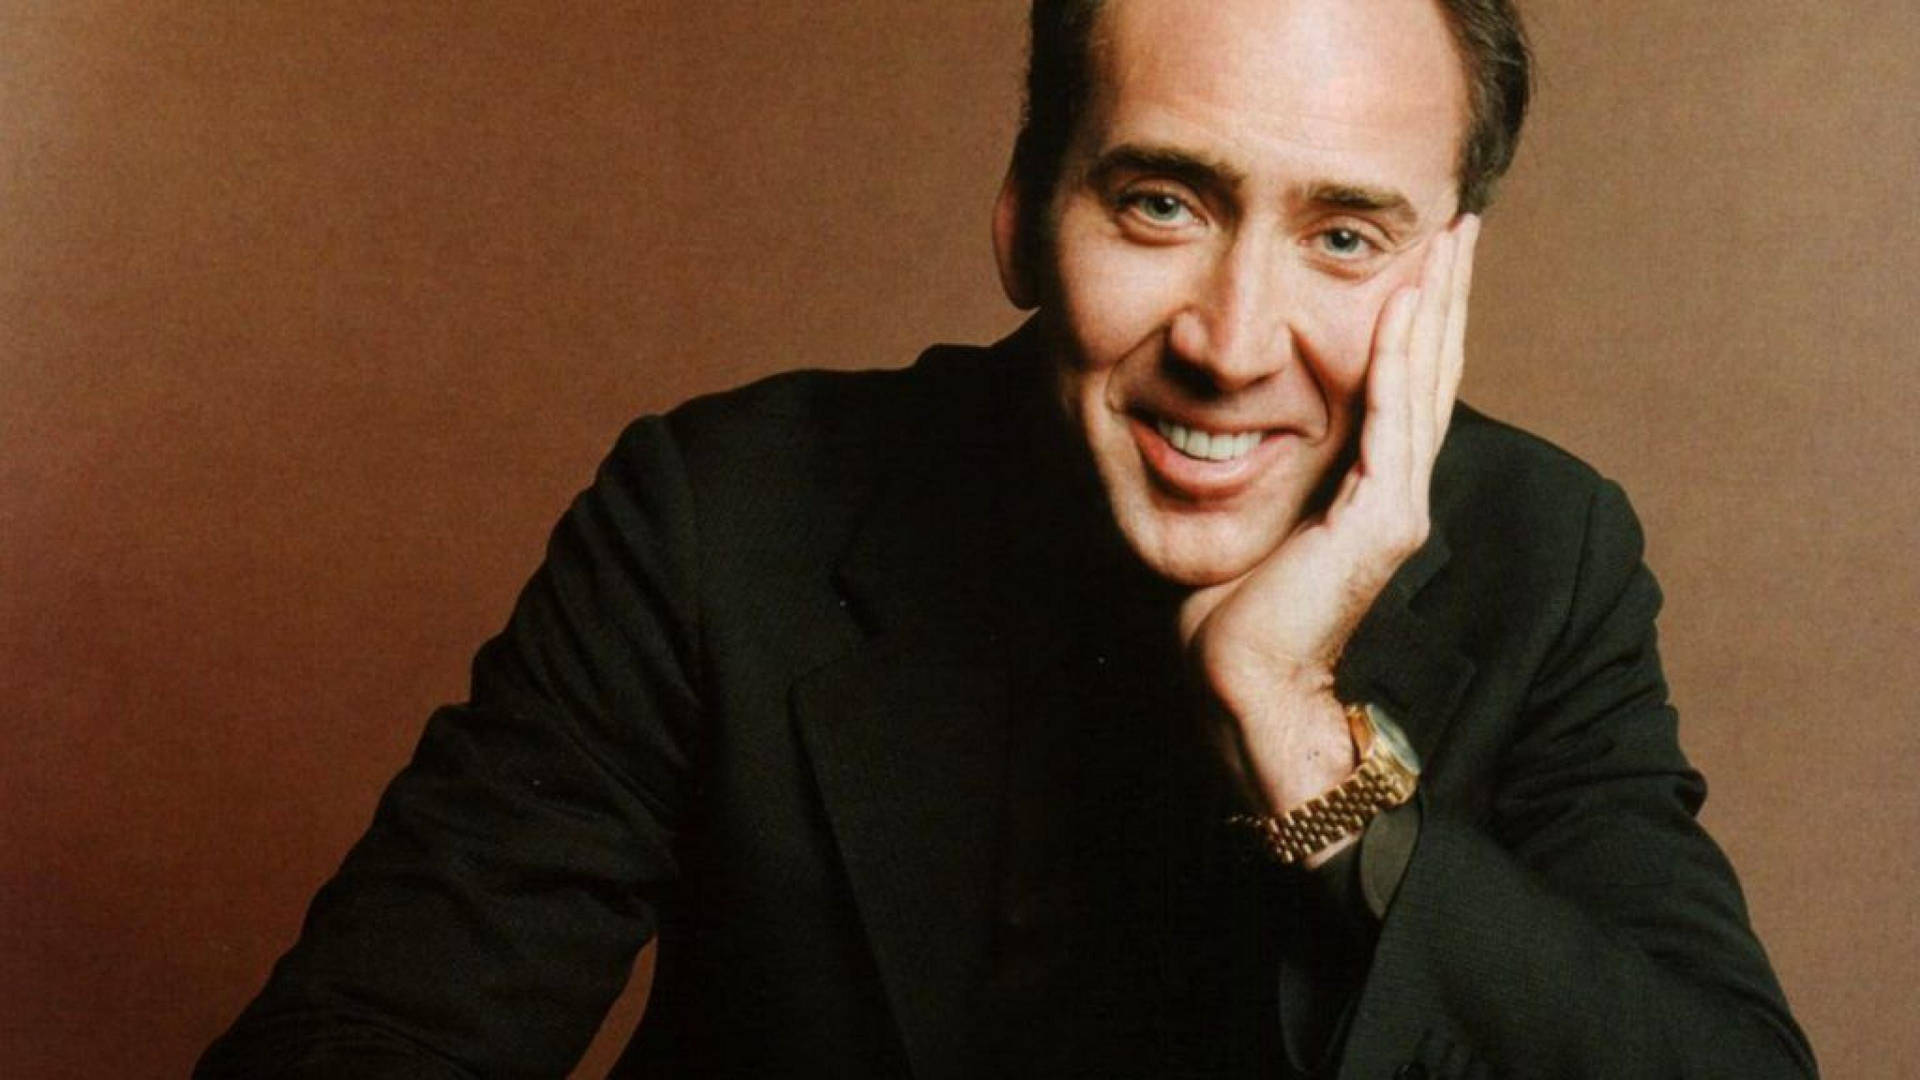 Nicolas Cage Celebrity Portrait Background